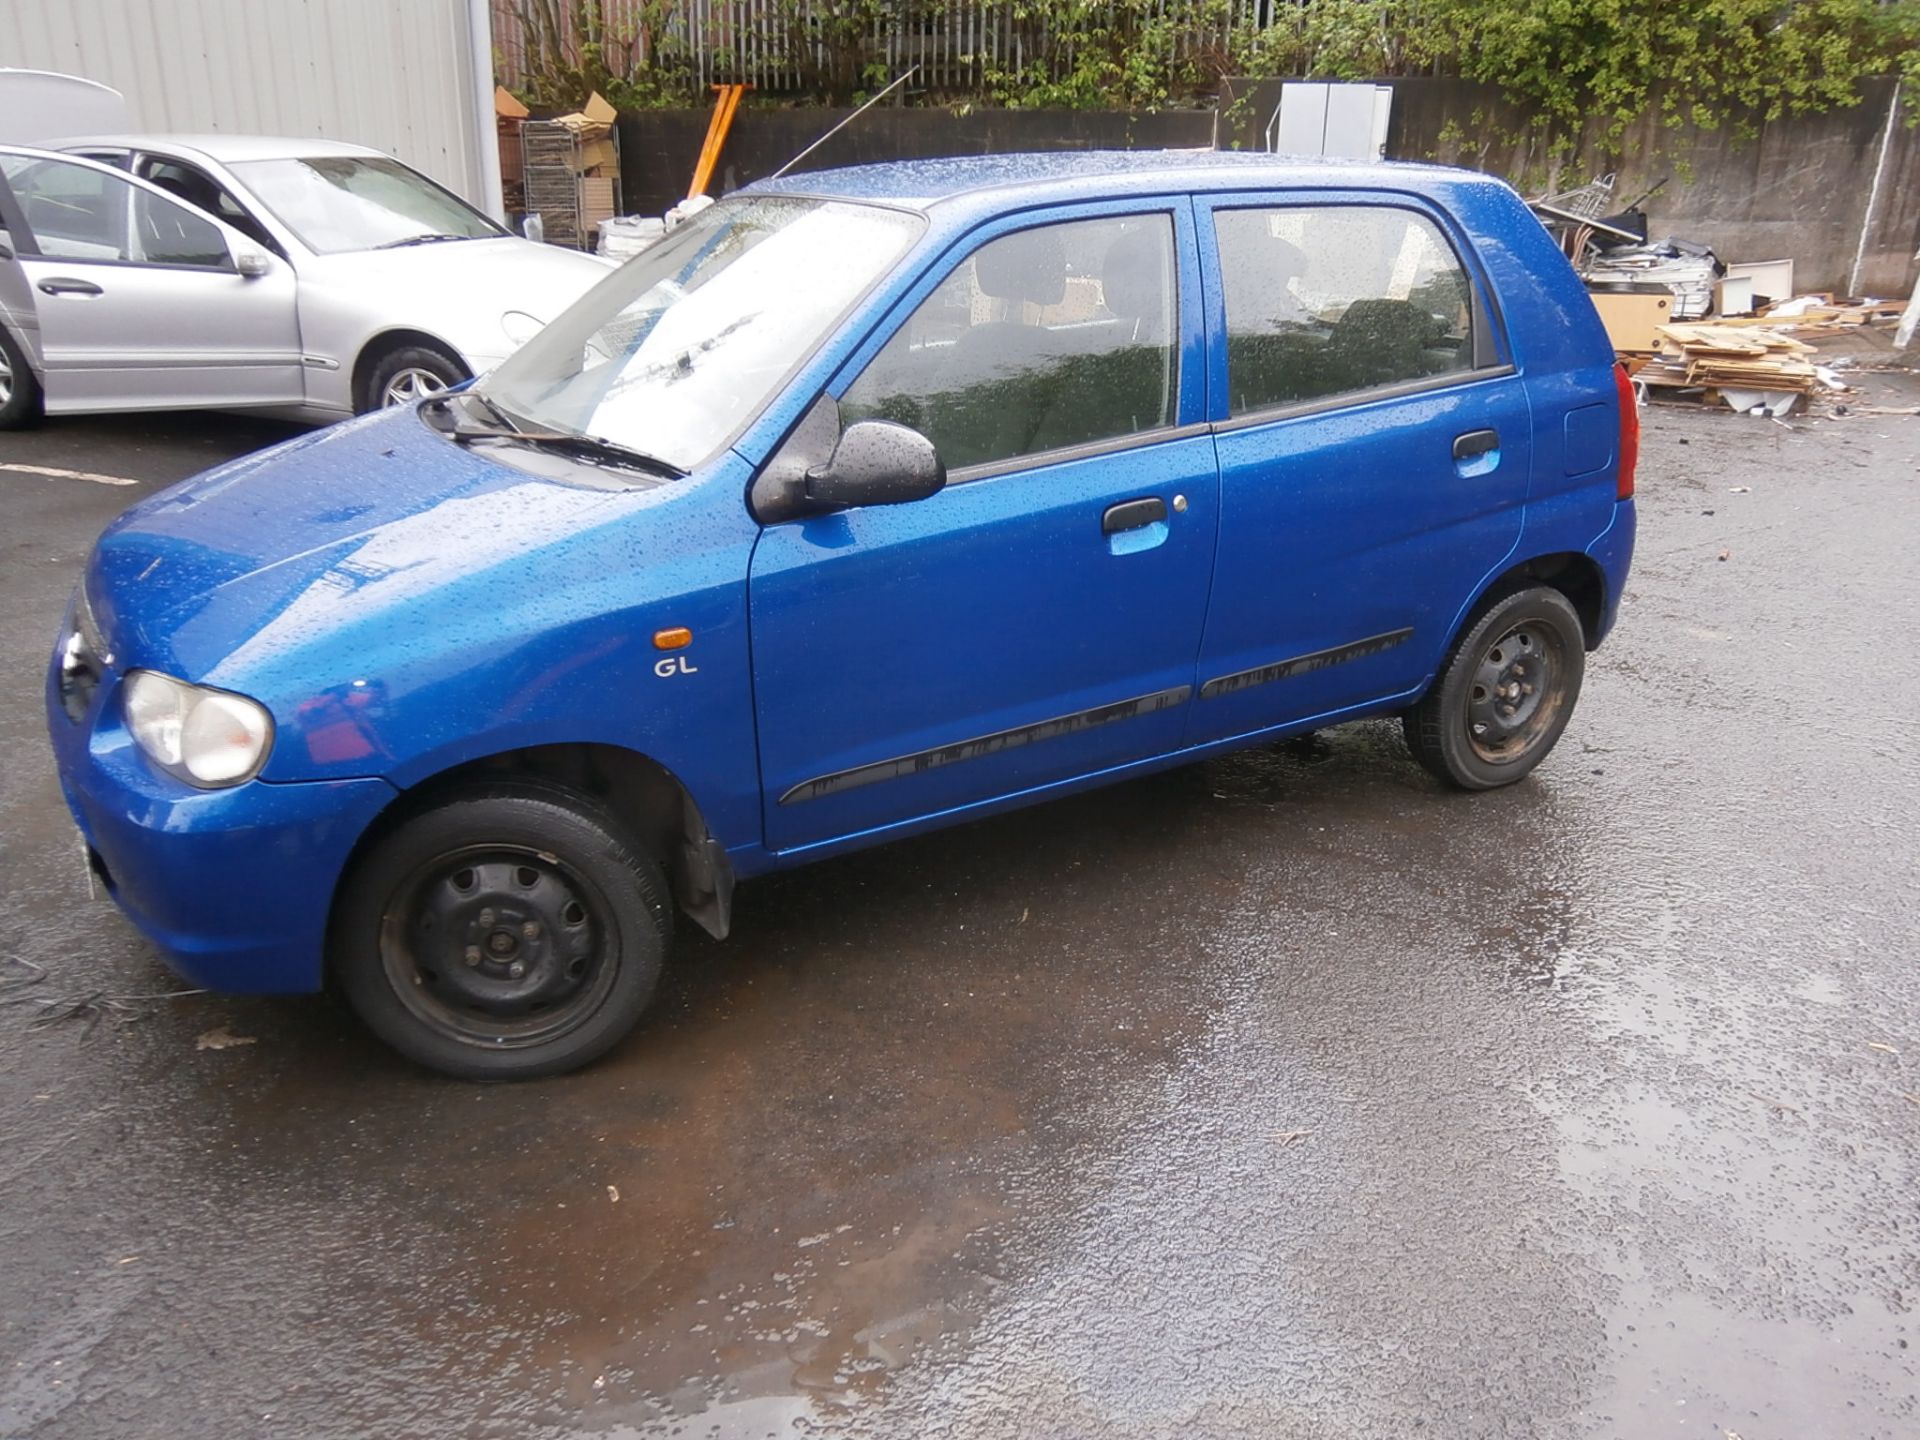 Suzuki Alto GL 1L Petrol Hatchback, Petrol, 06 Plate, 5 Door, Blue, MOT'd Until April 2016 - Image 3 of 8